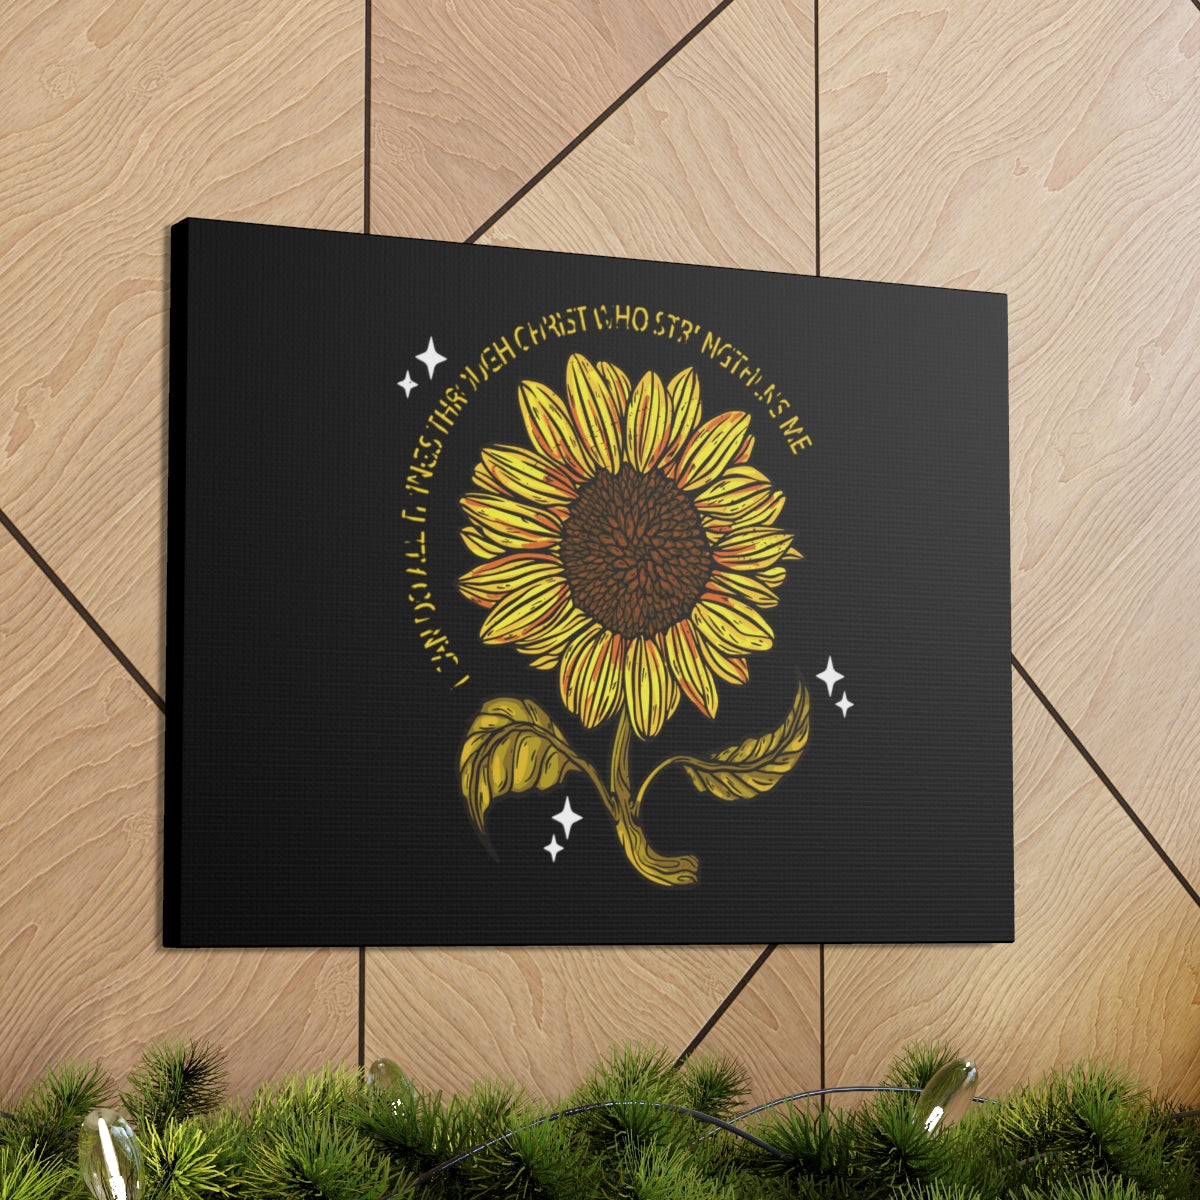 Sunflower (13)- Print